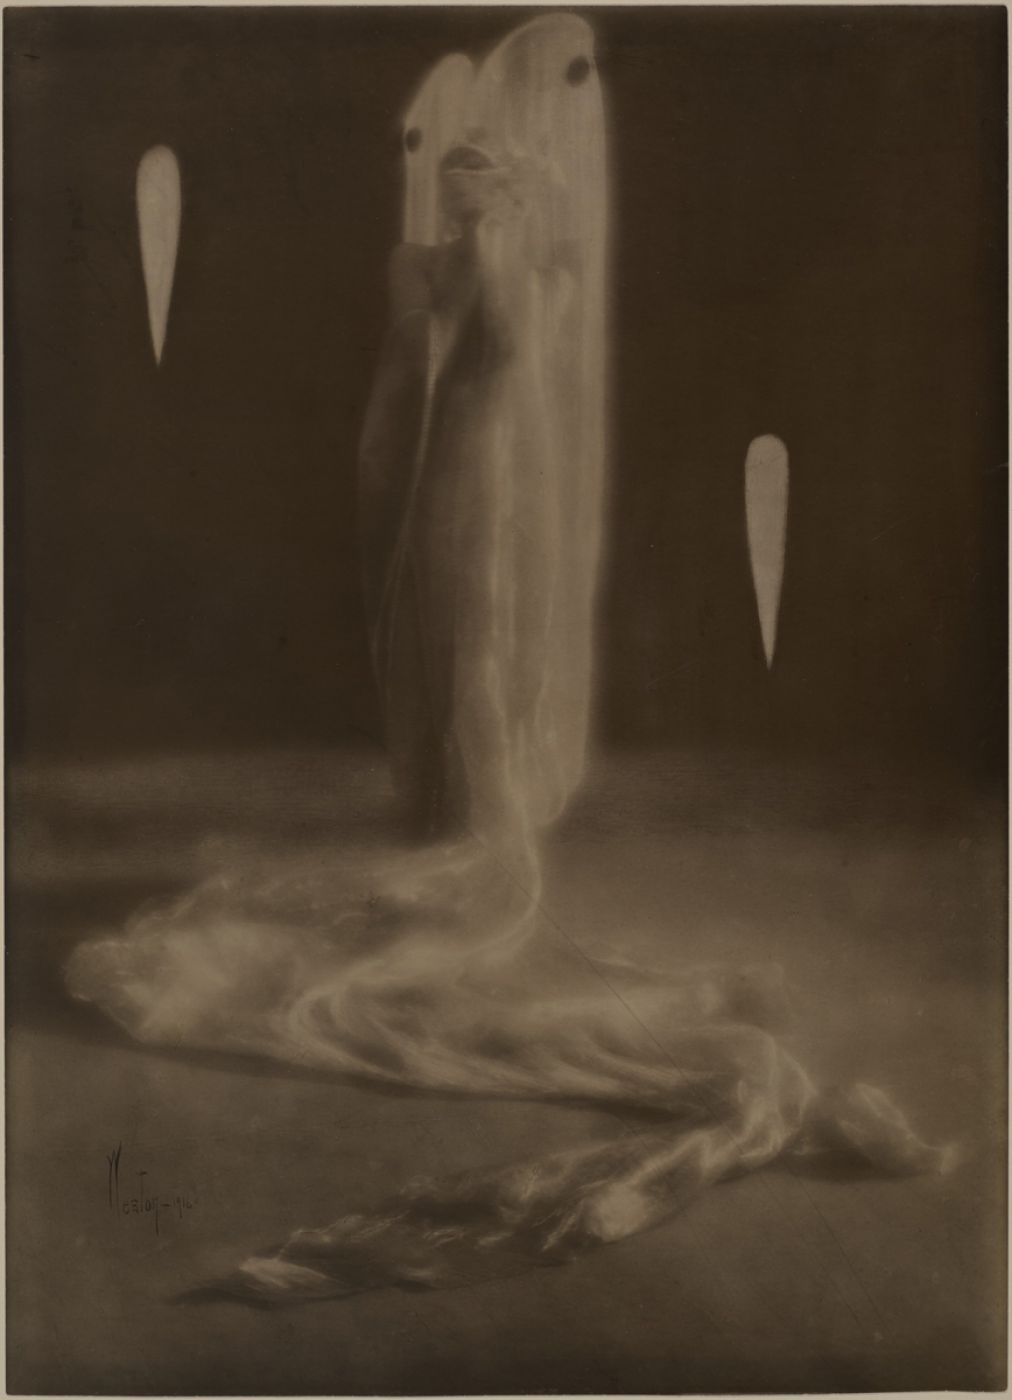 Edward Weston, “Natacha Rambova”, 1916